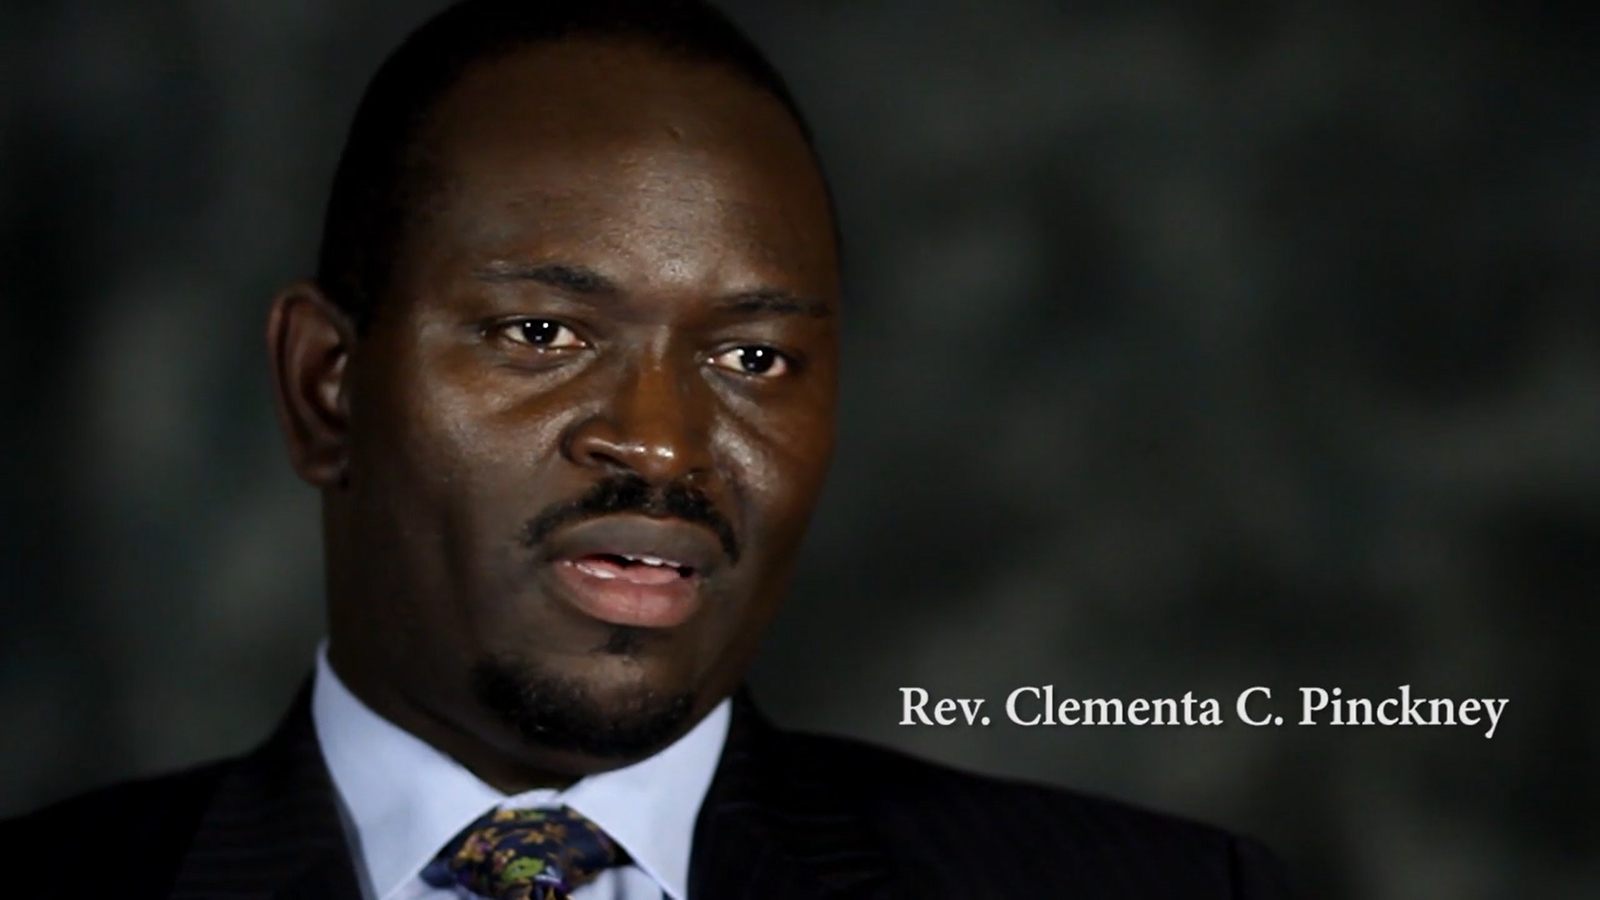 The Rev. Clementa C. Pinckney. Video screengrab